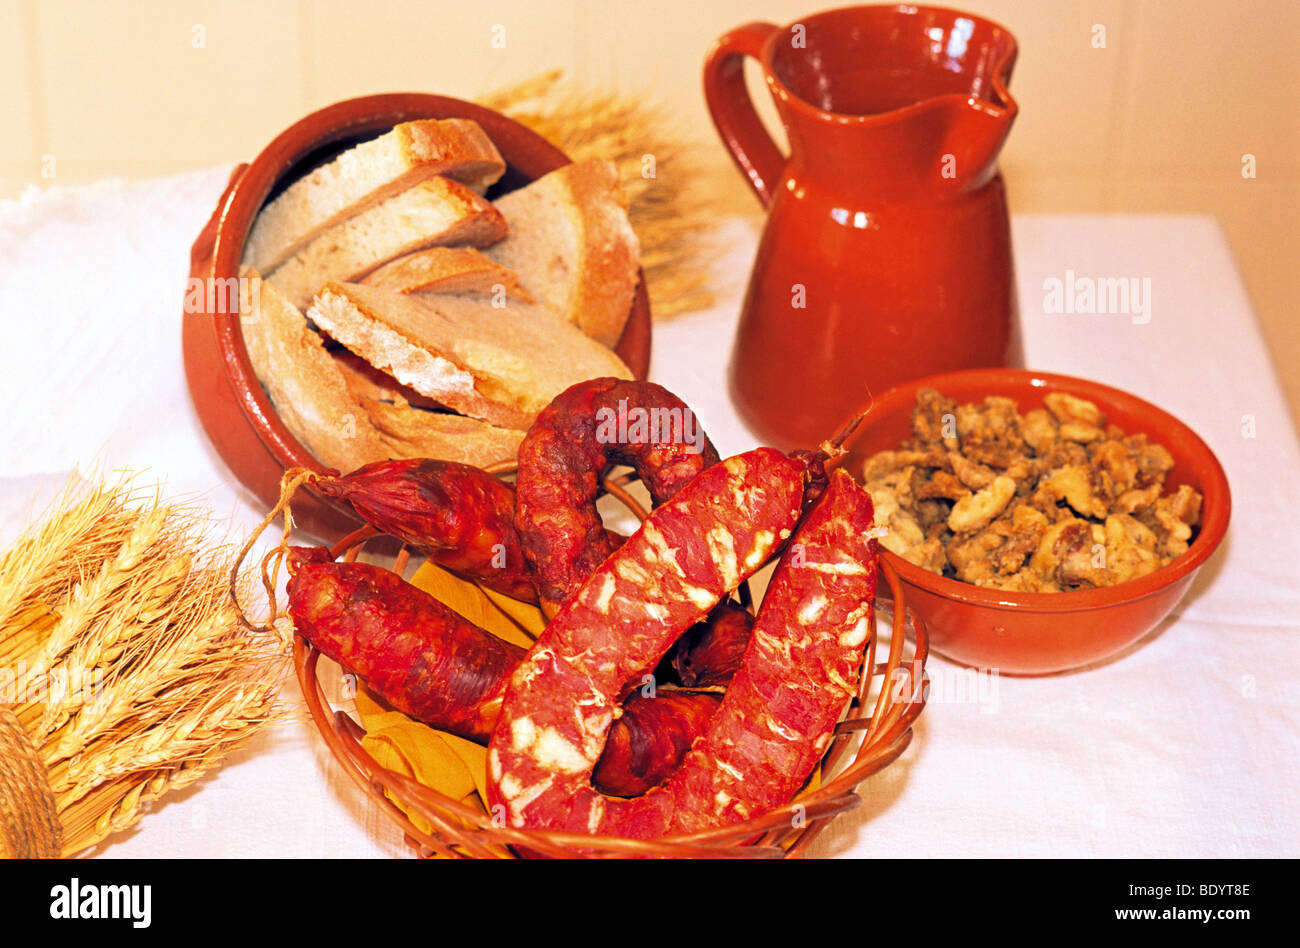 Portugal, Alentejo: Traditional ingredients of the rural Alentejo gastronomy Stock Photo